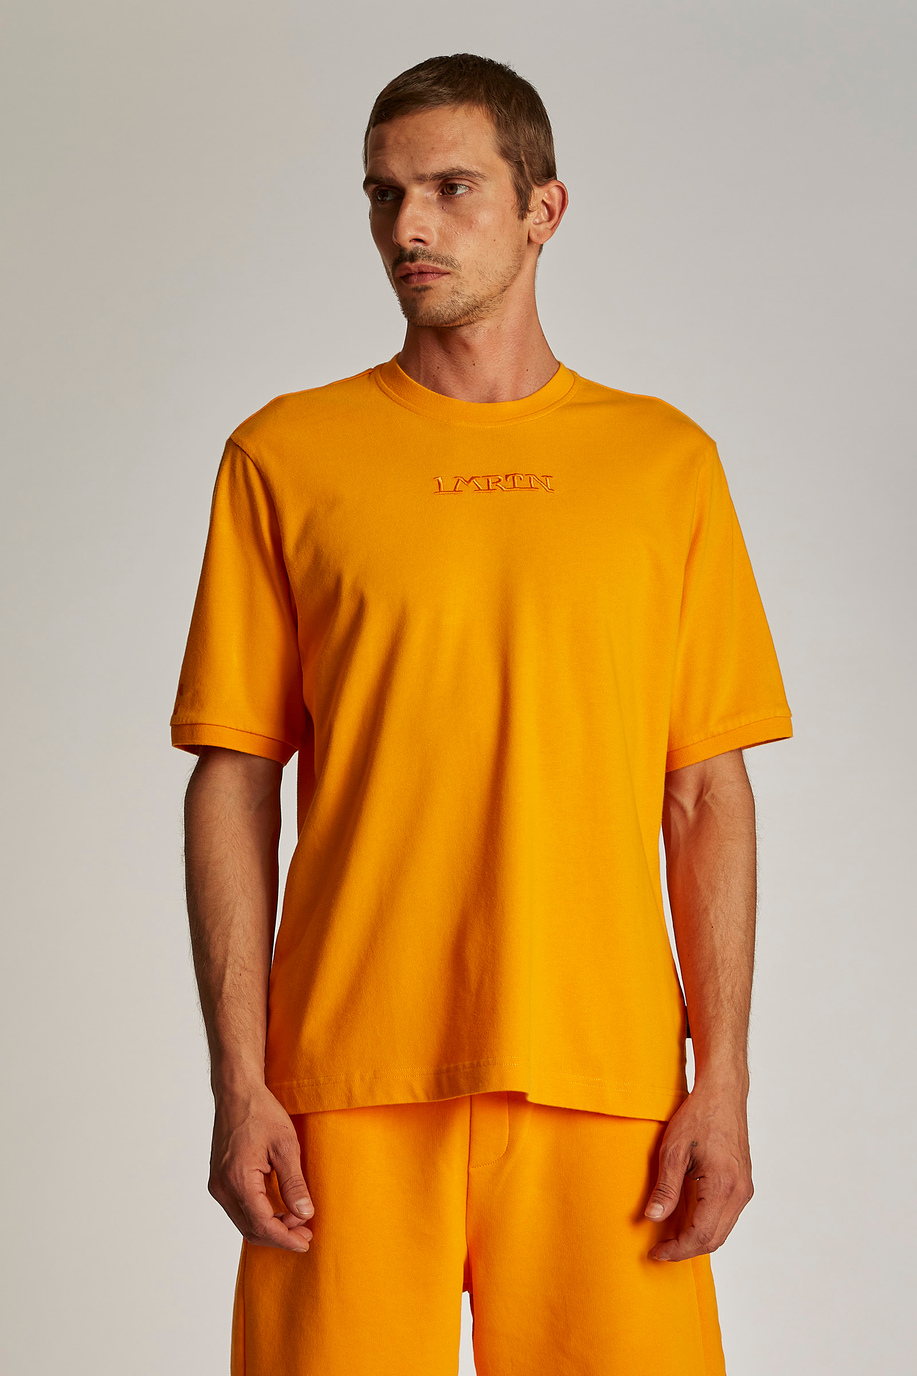 Camiseta de hombre de algodón de manga corta, modelo oversize - Camisetas | La Martina - Official Online Shop